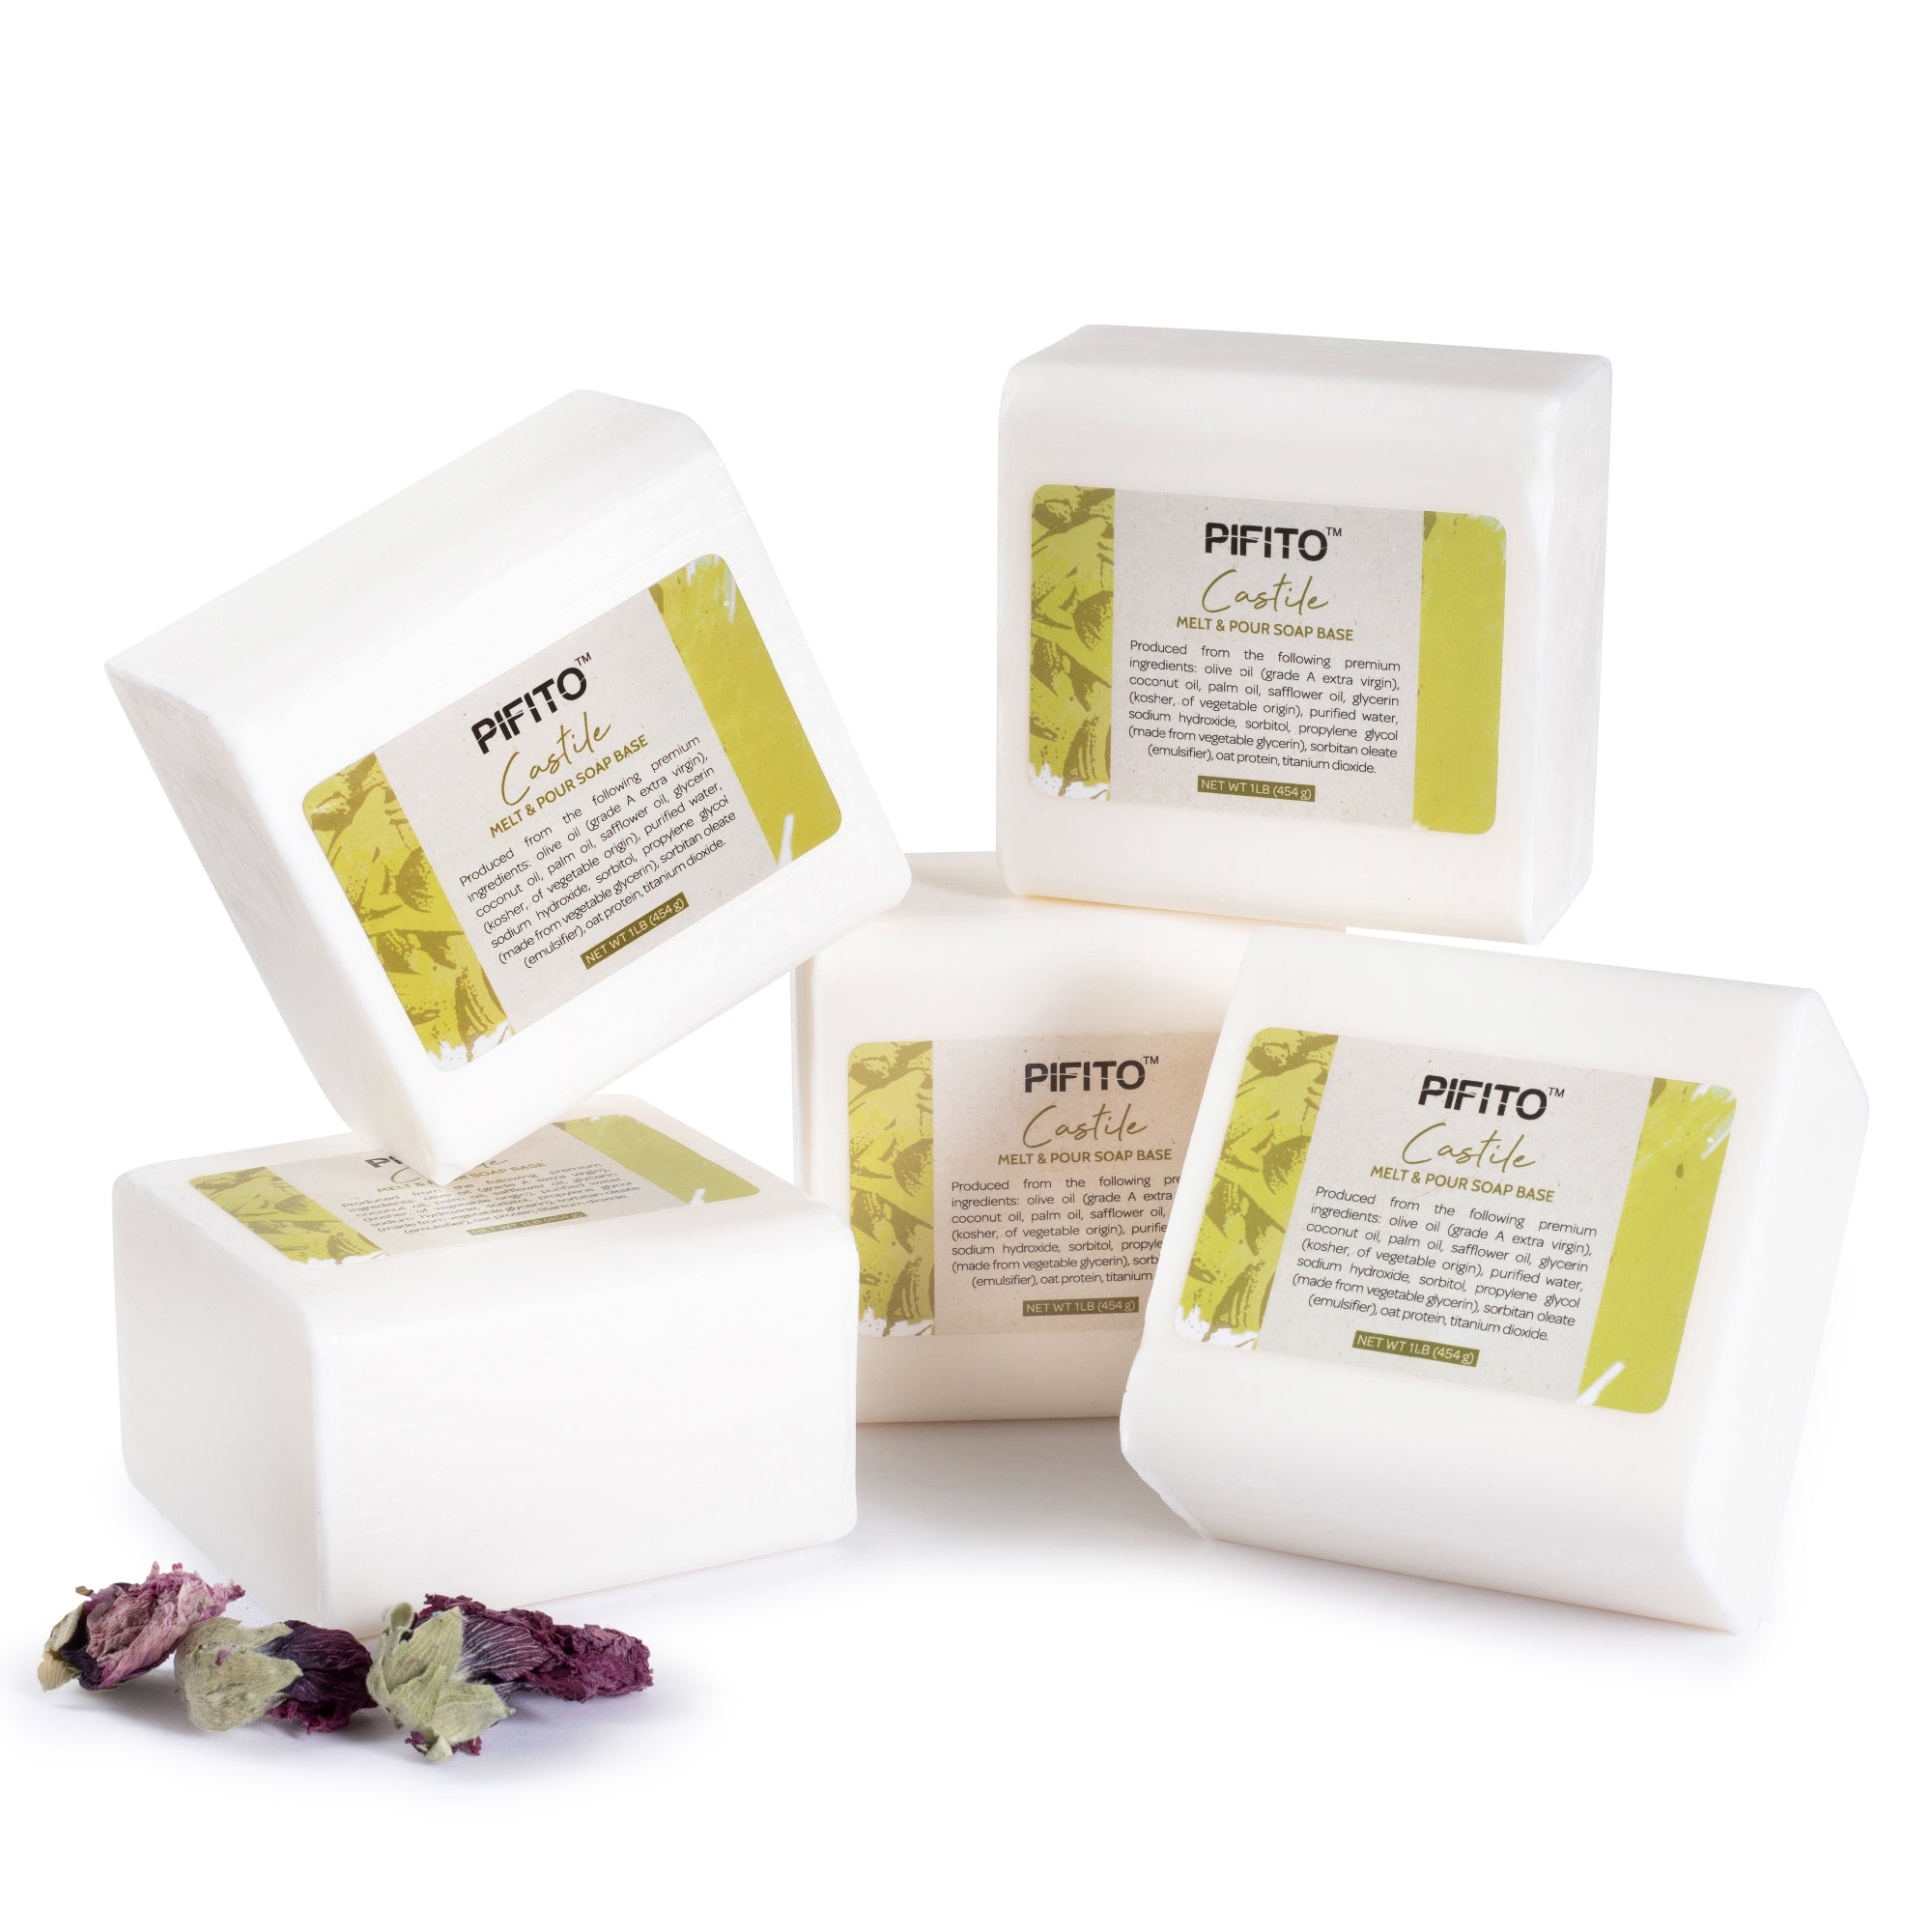 Pifito Shea Butter Melt and Pour Soap Base (2 lb) │ Premium 100